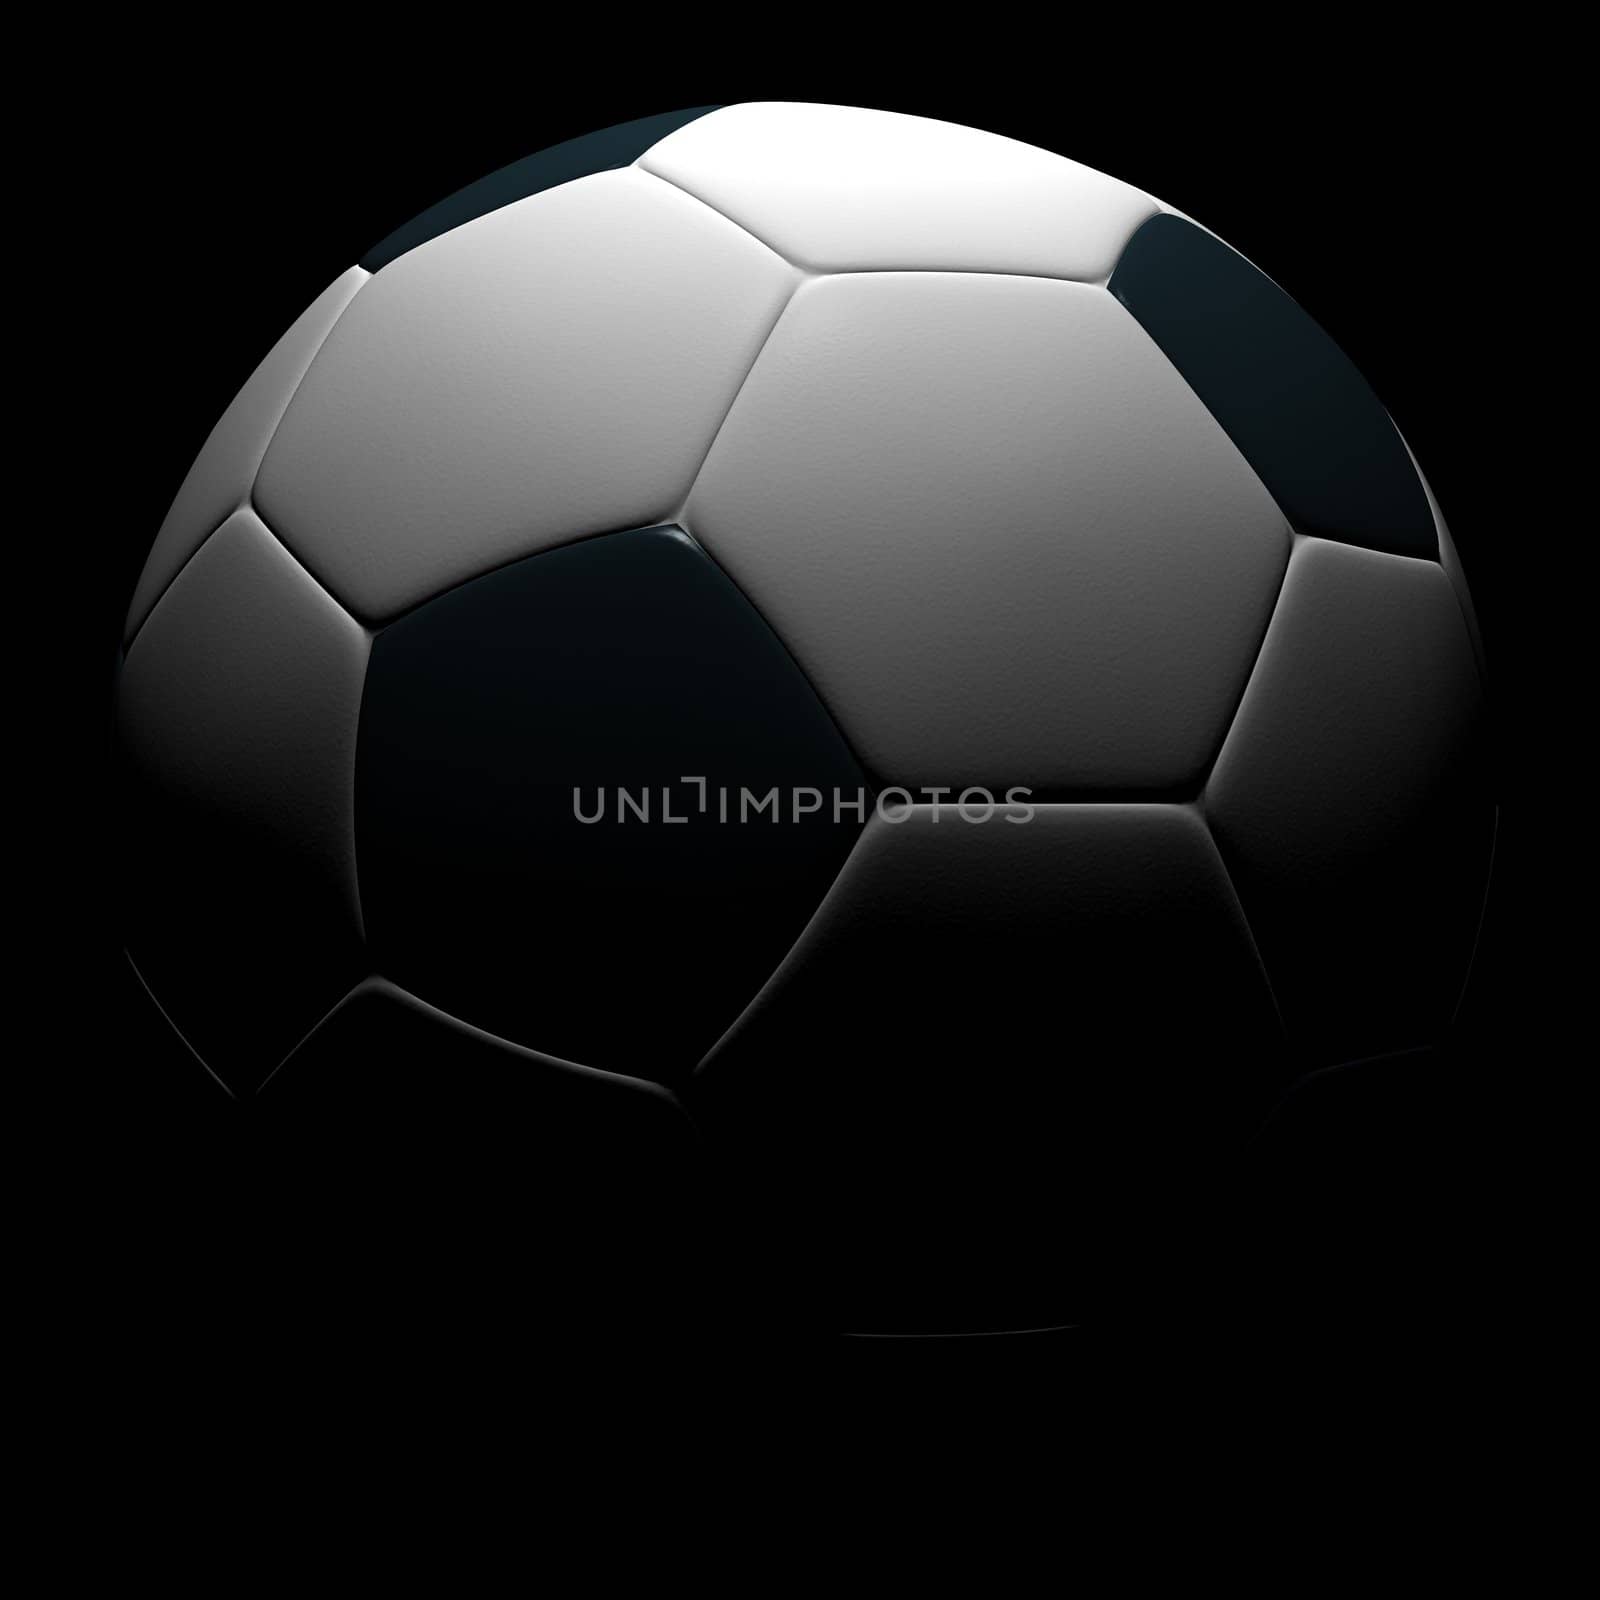 Soccer ball by anki21